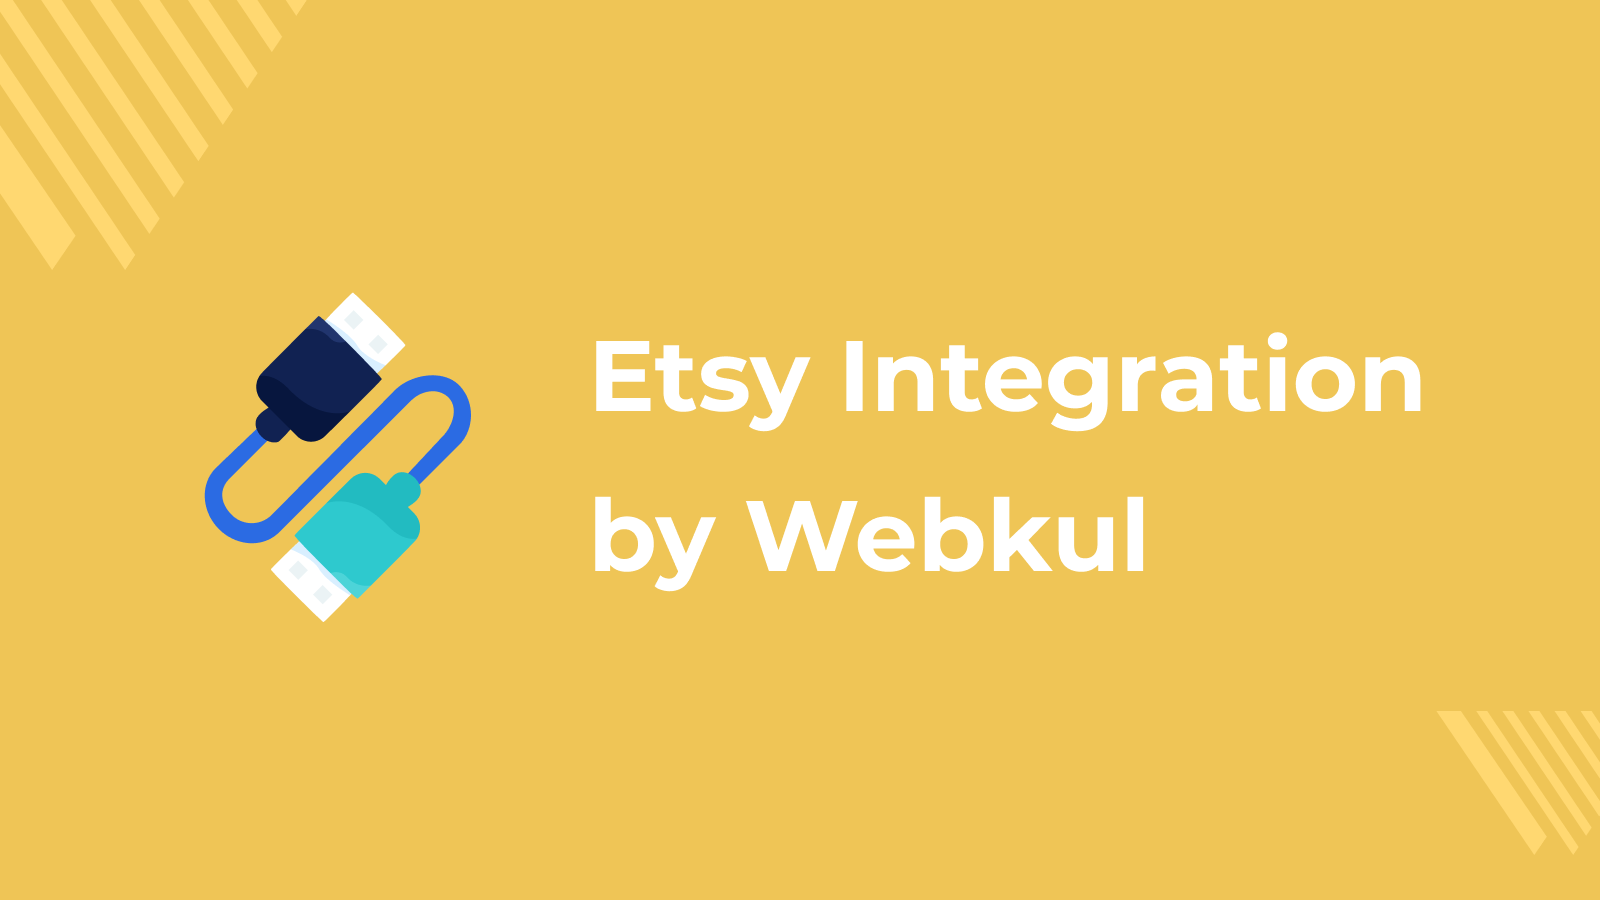 Etsy integration by webkul 